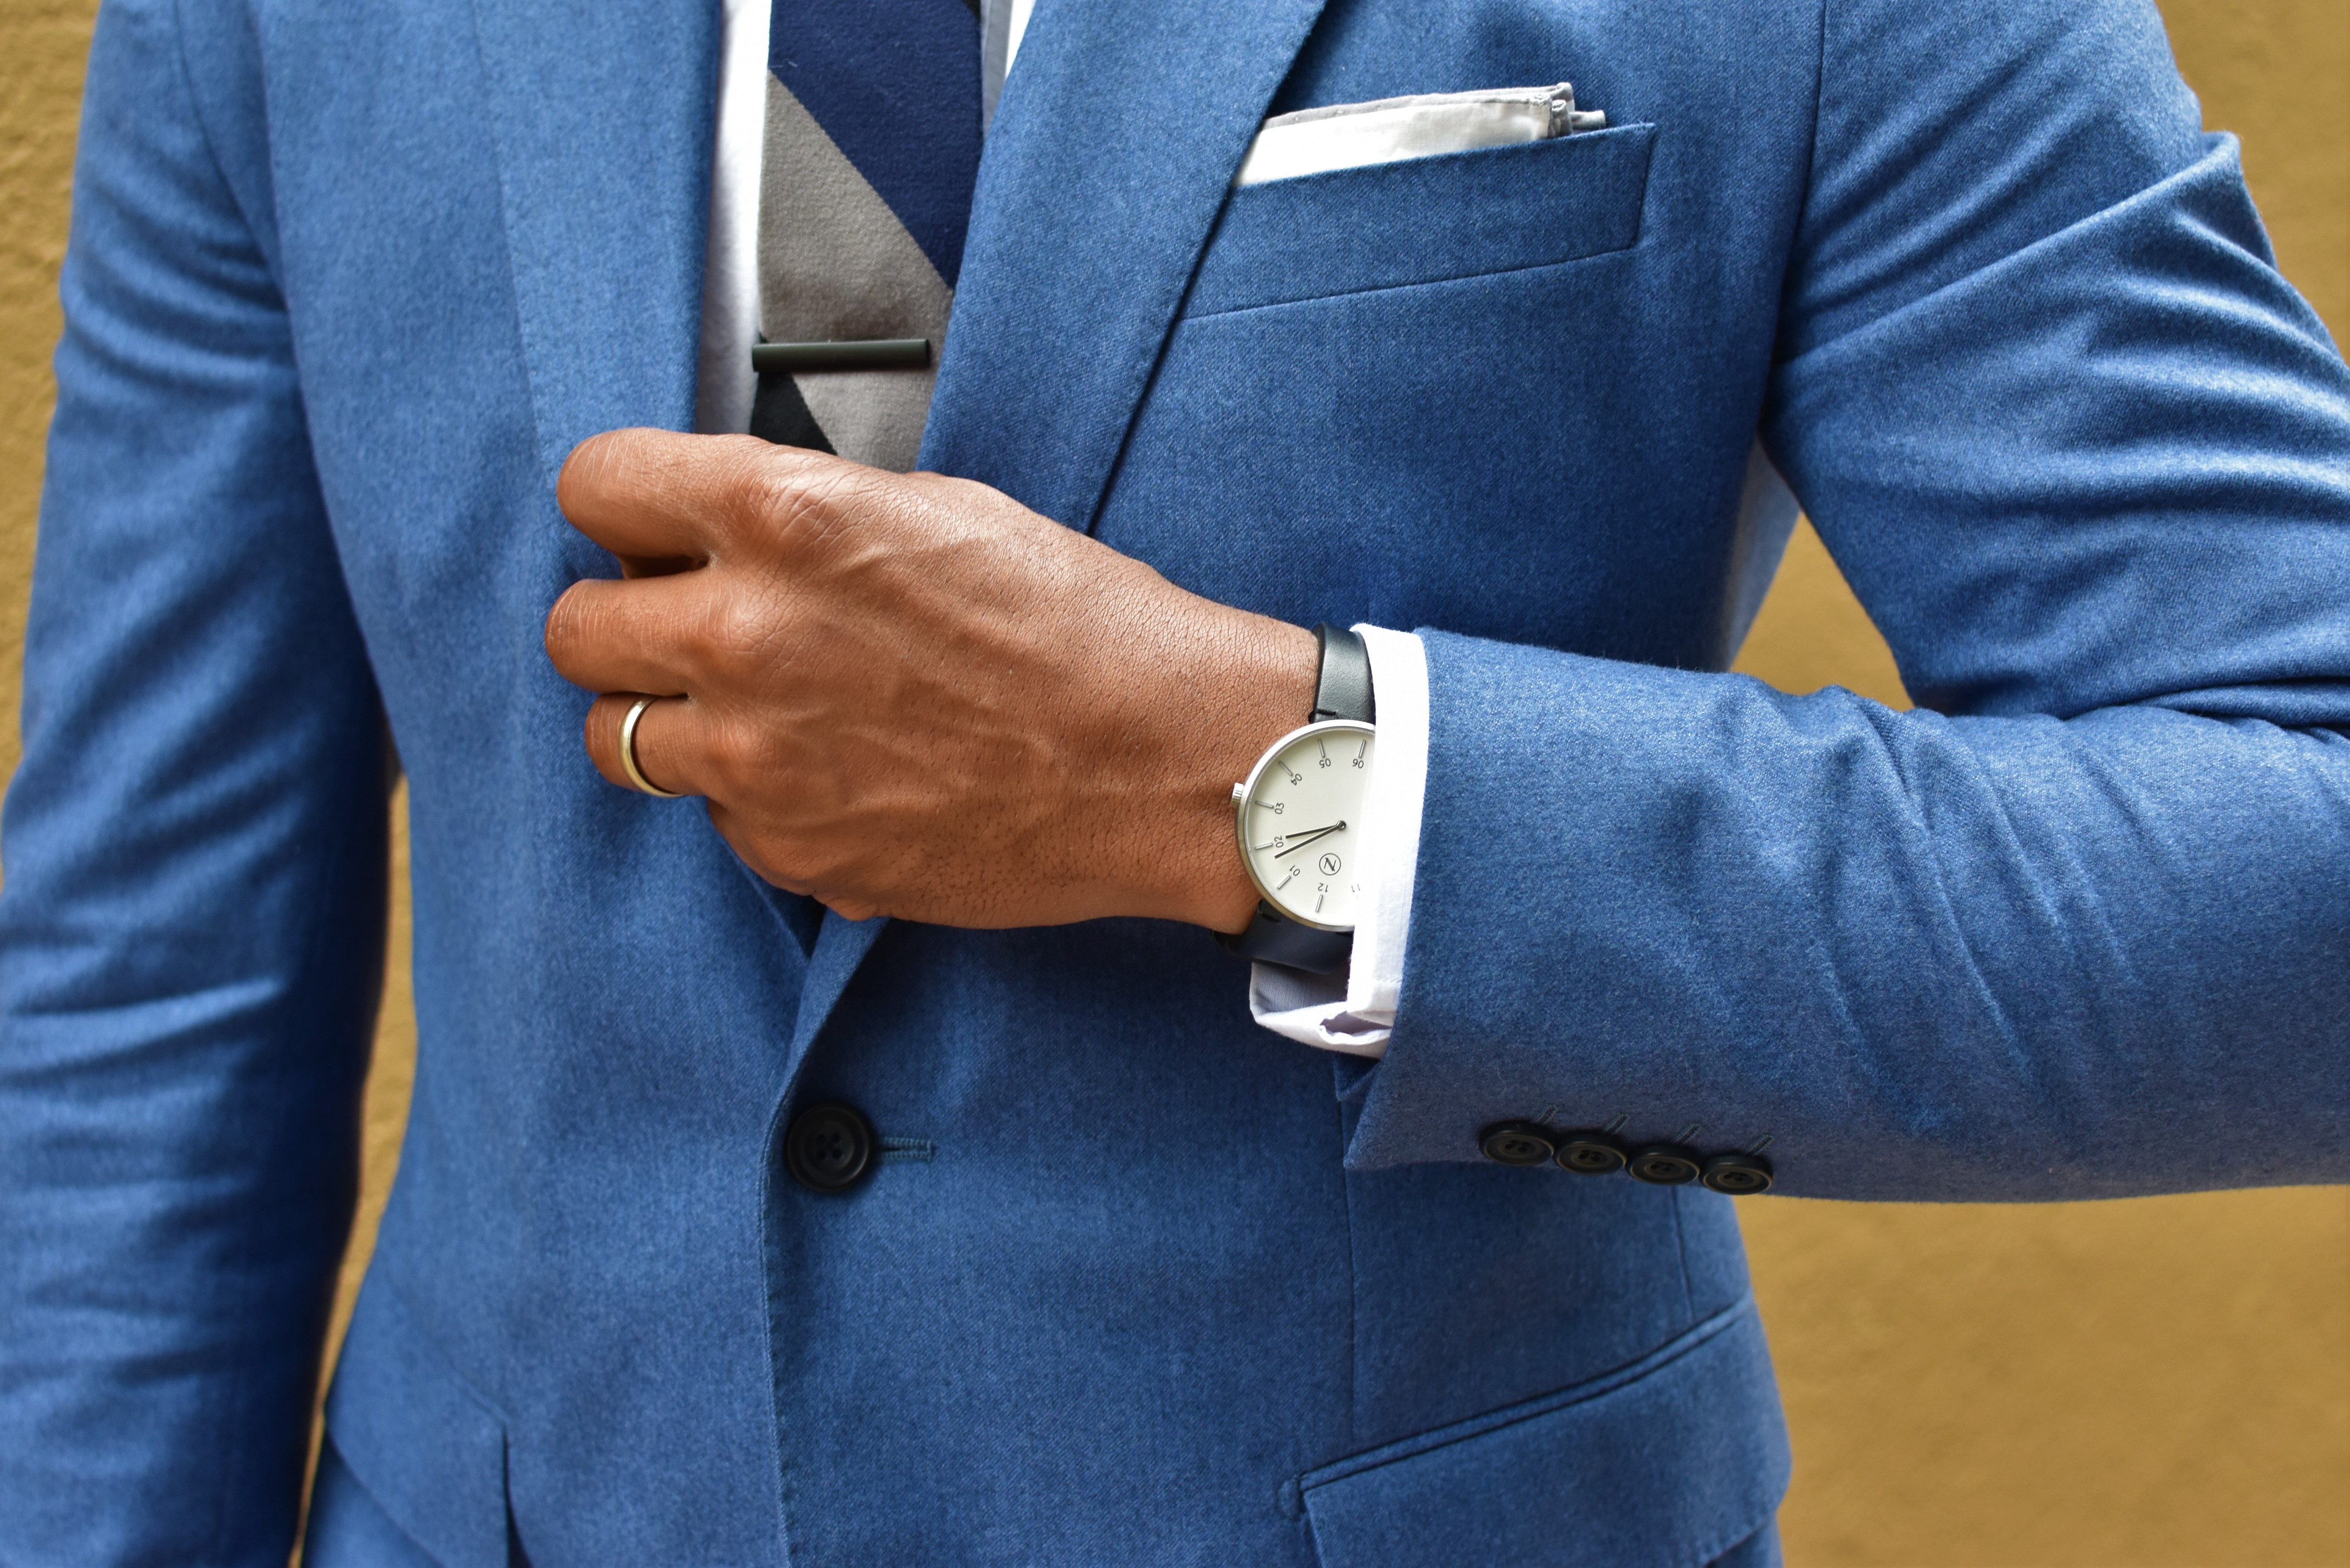 Sabir M. Peele of Men's Style Pro Hardy Amies Periwinkle Blue Suit